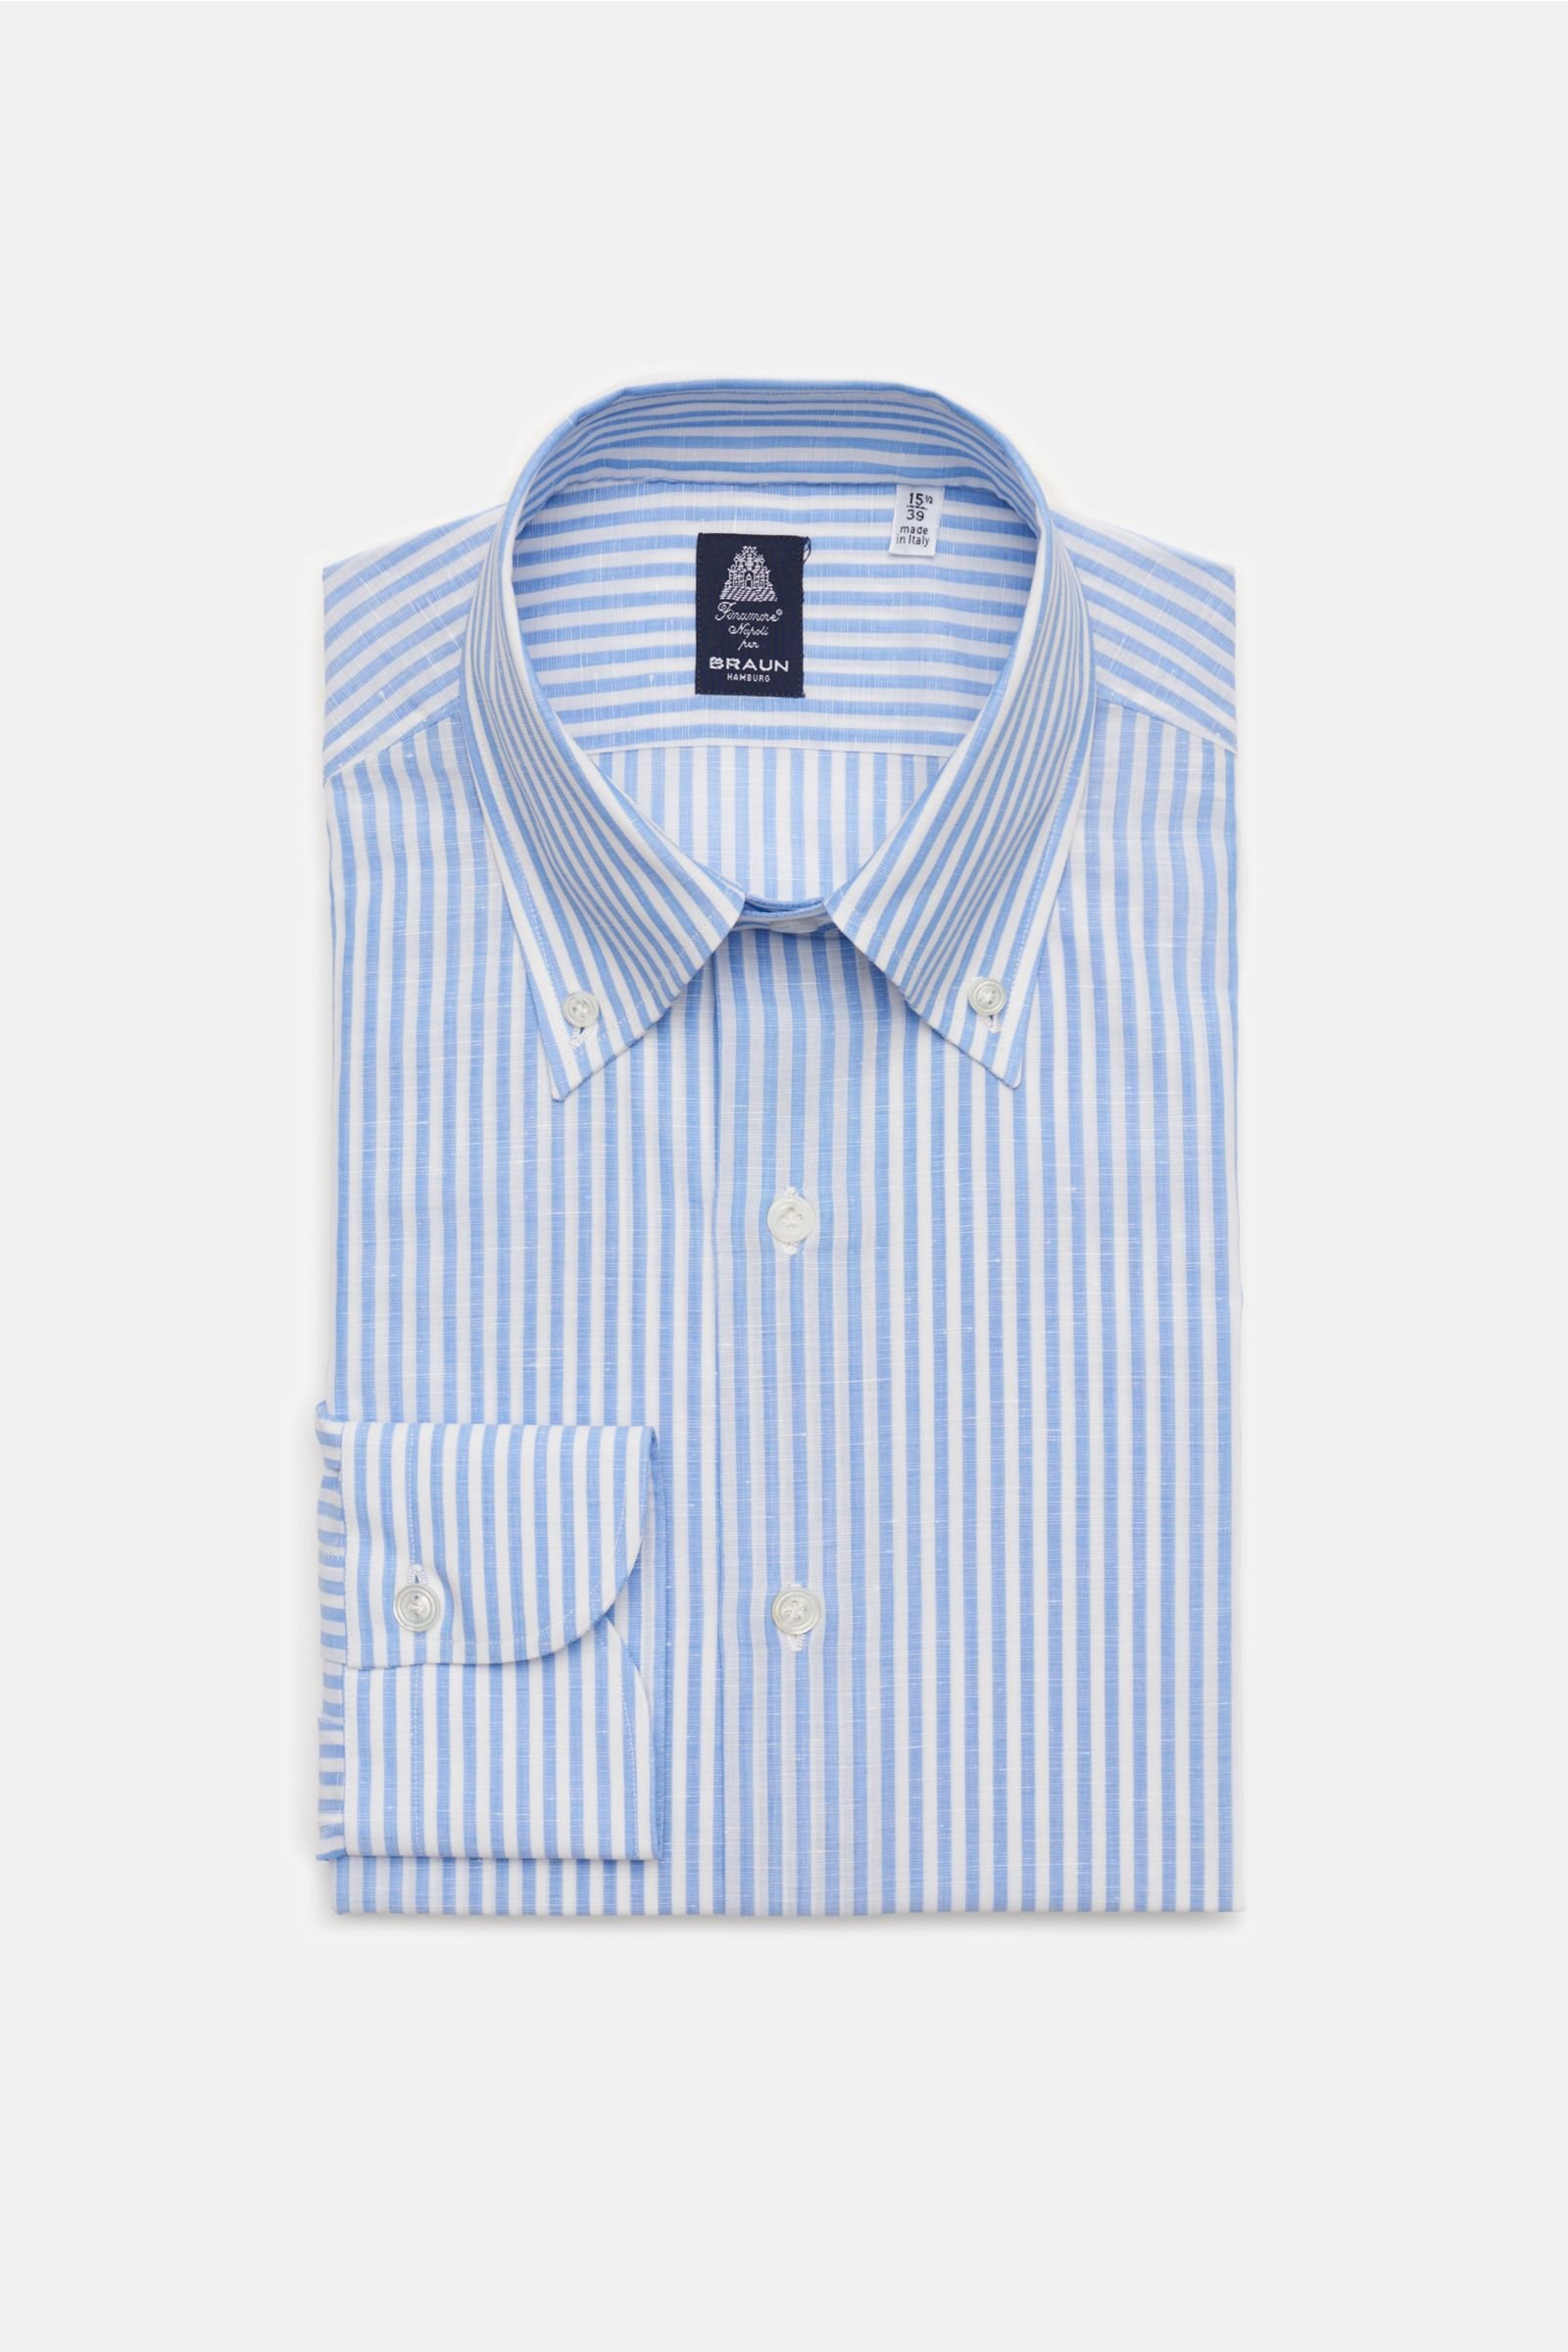 Business shirt 'Leonardo Napoli' button-down collar light blue/white striped